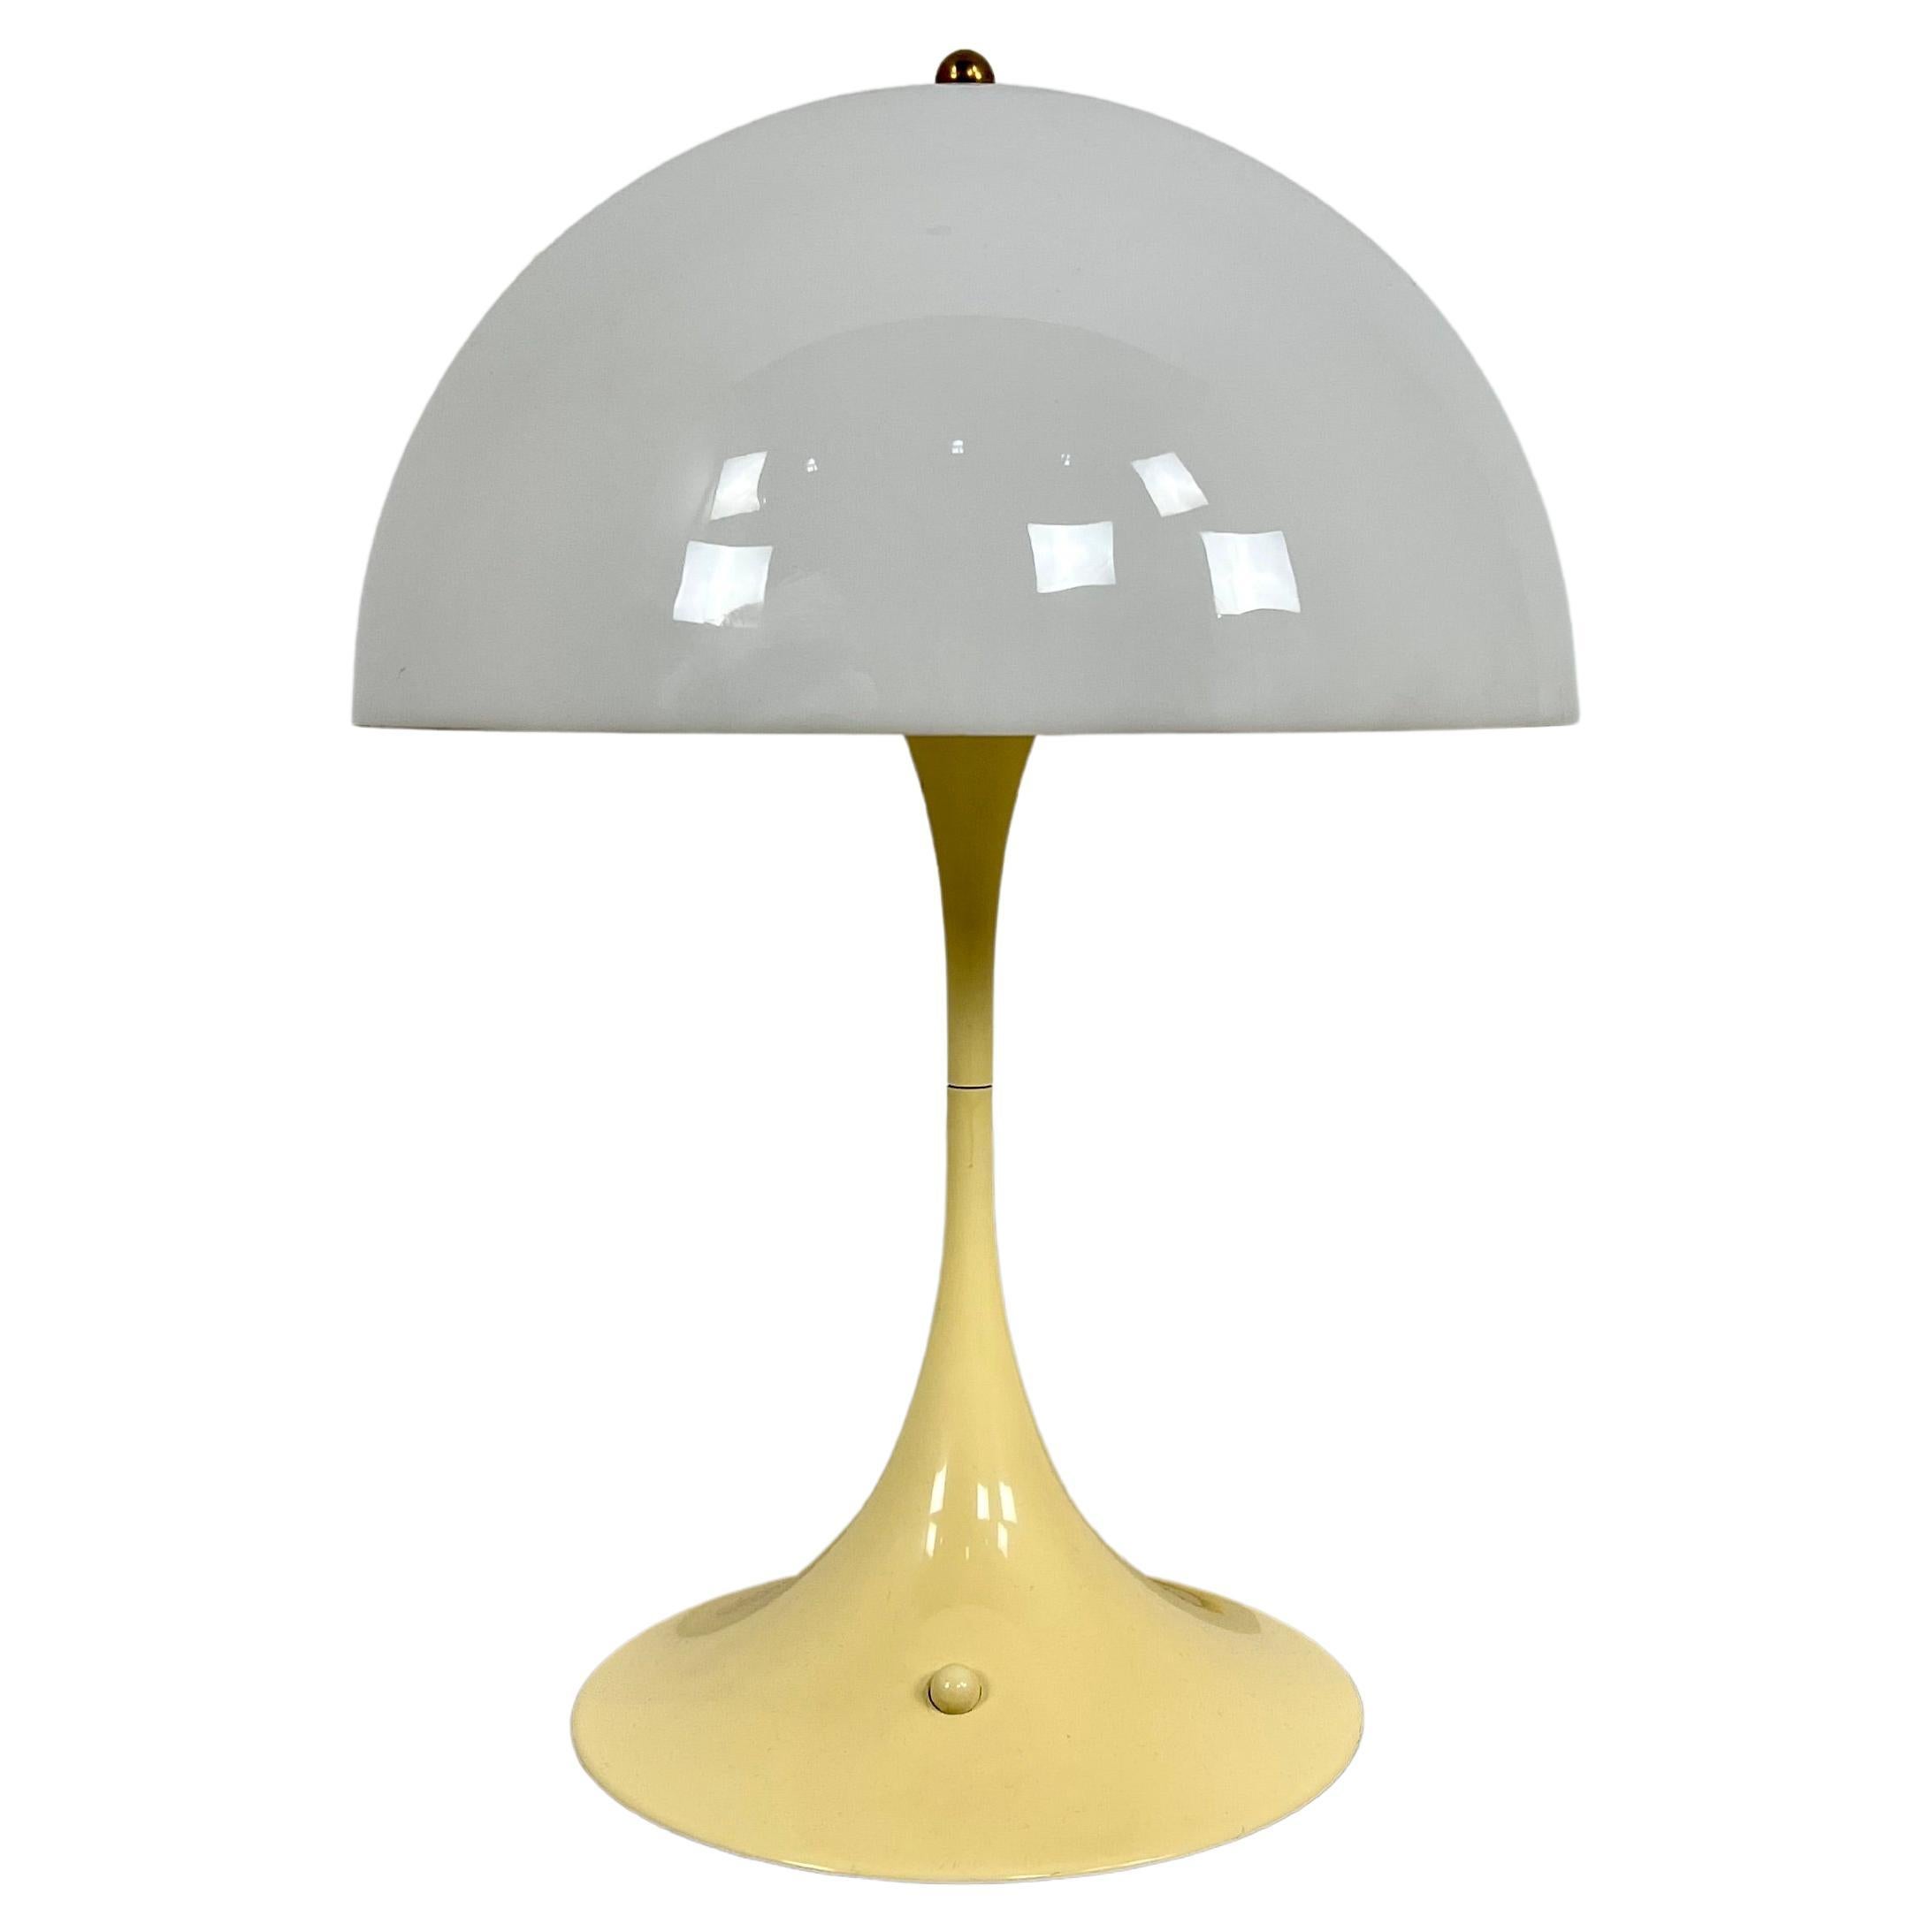 Panthella Table Lamp by Verner Panton for Louis Poulsen, 1970s